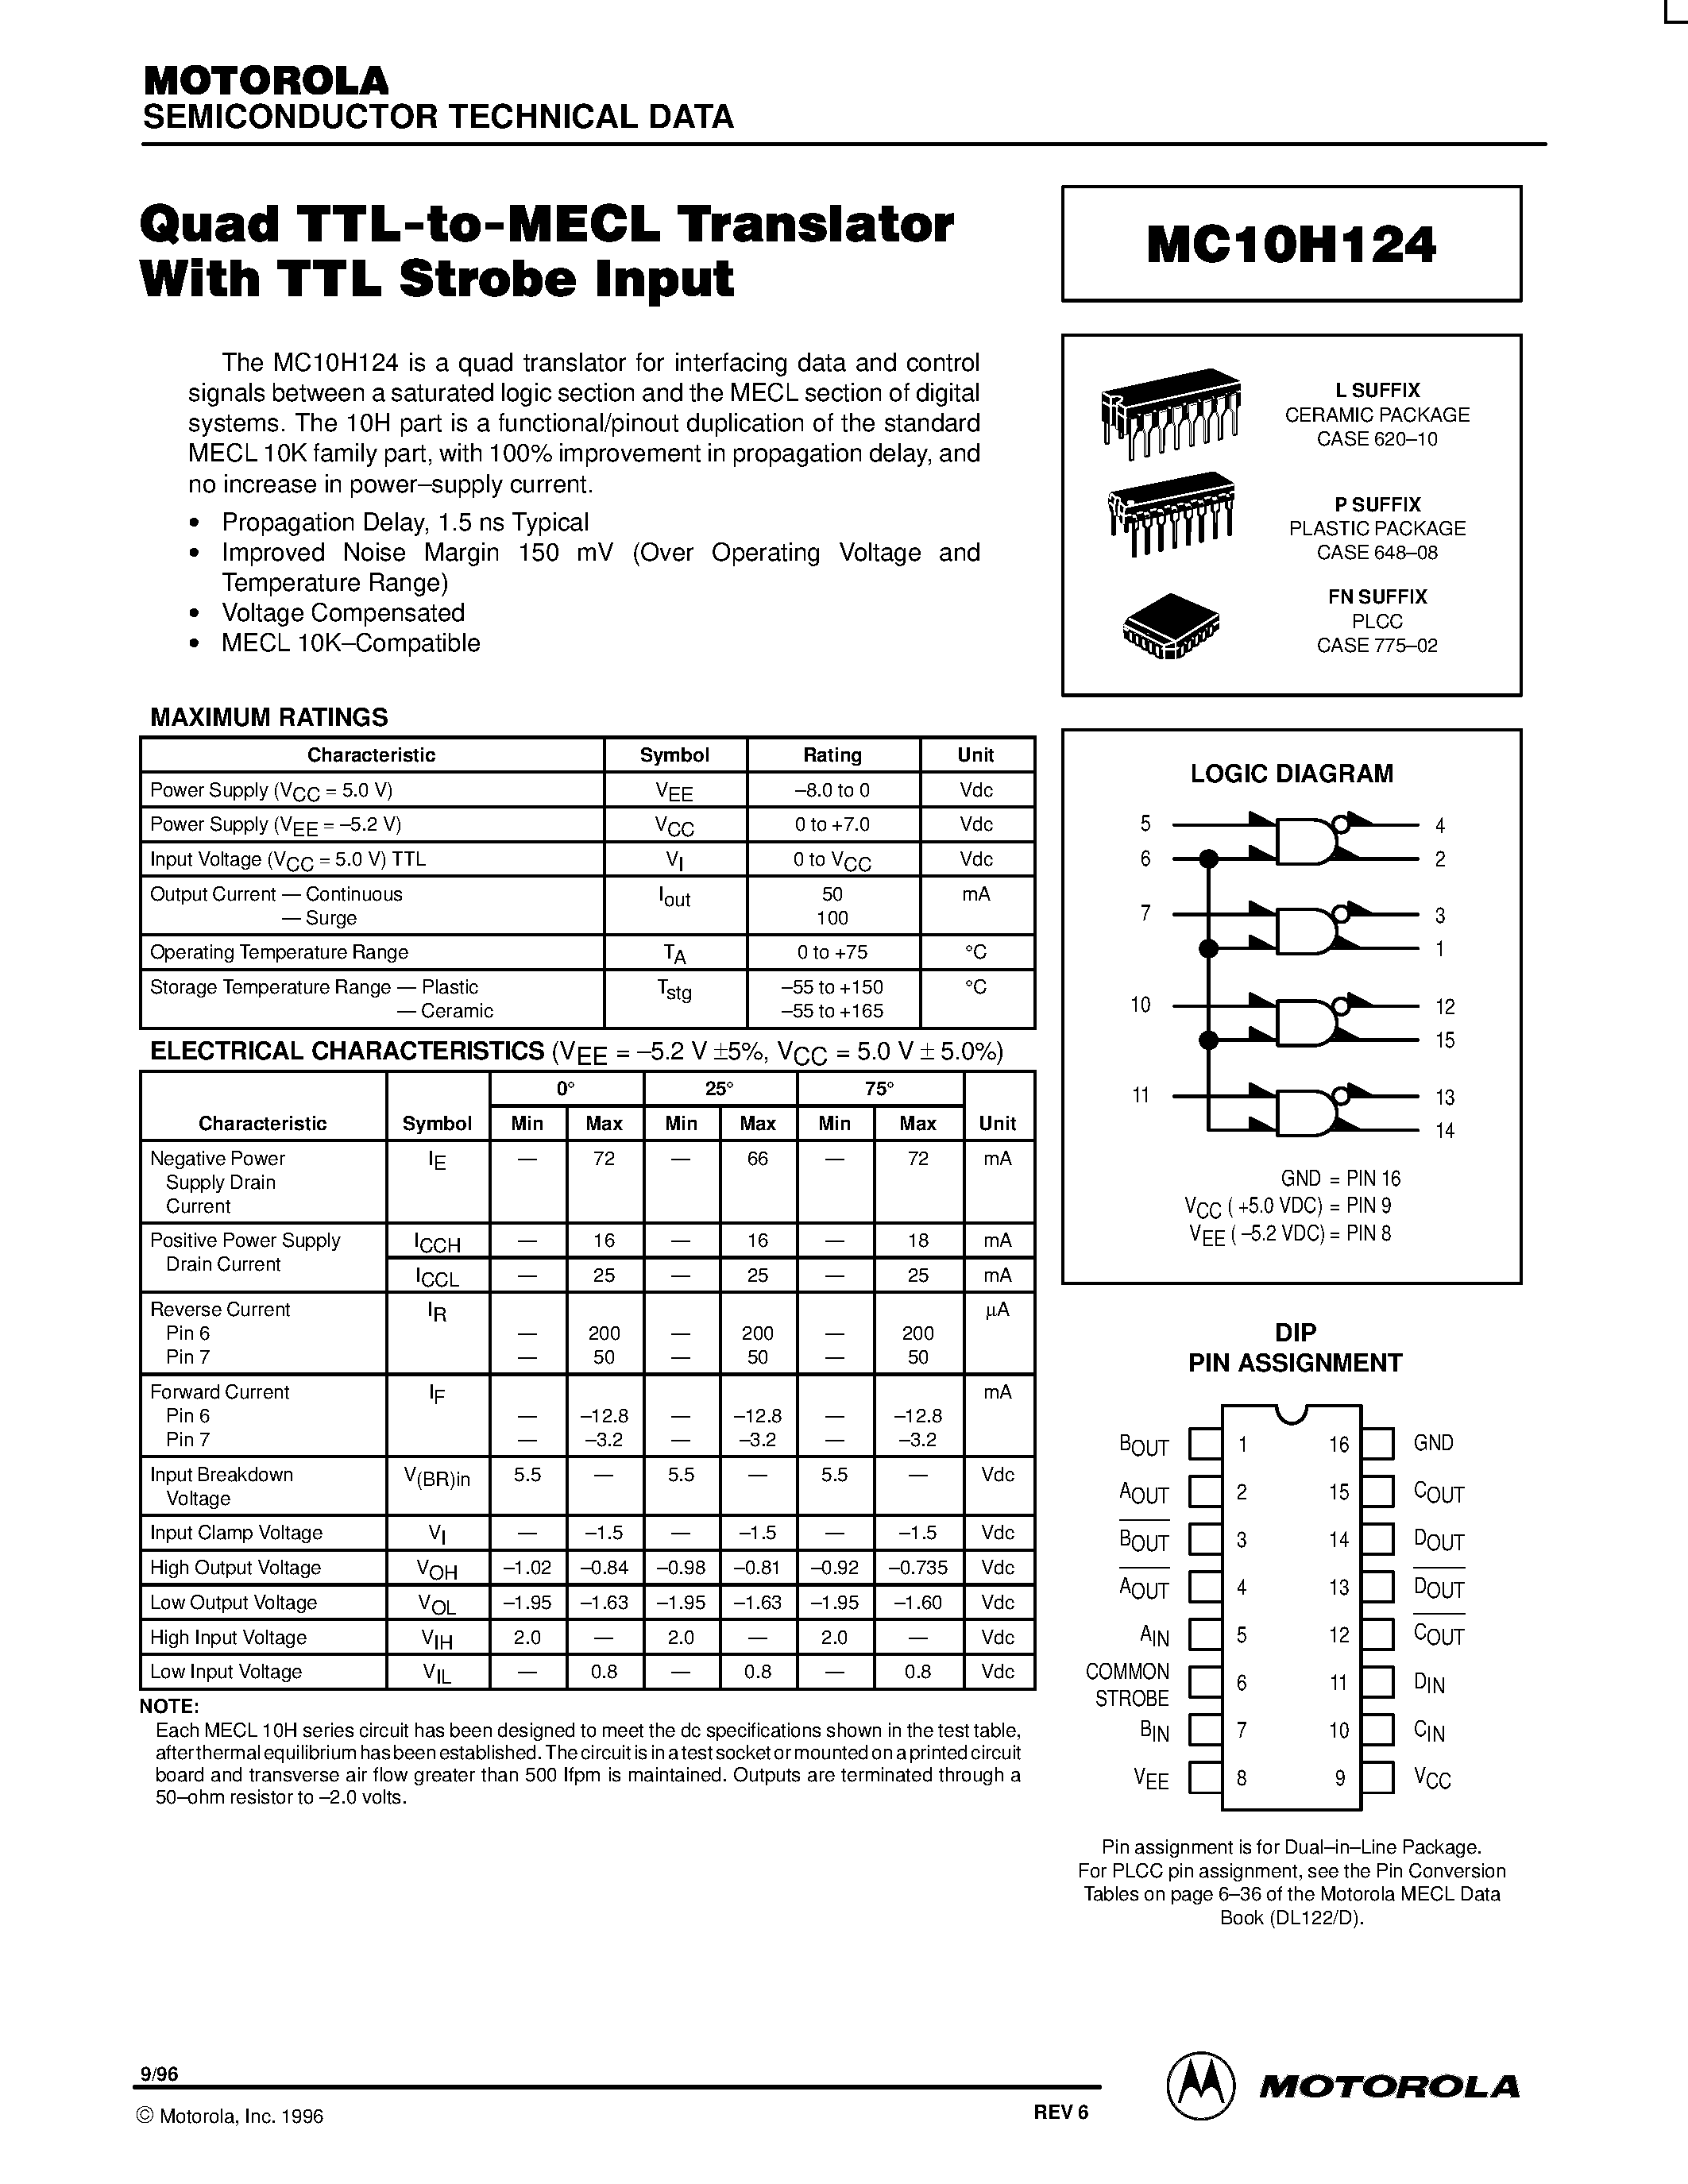 Datasheet MC10H124L - Quad TTL-to-MECL Translator With TTL Strobe Input page 1